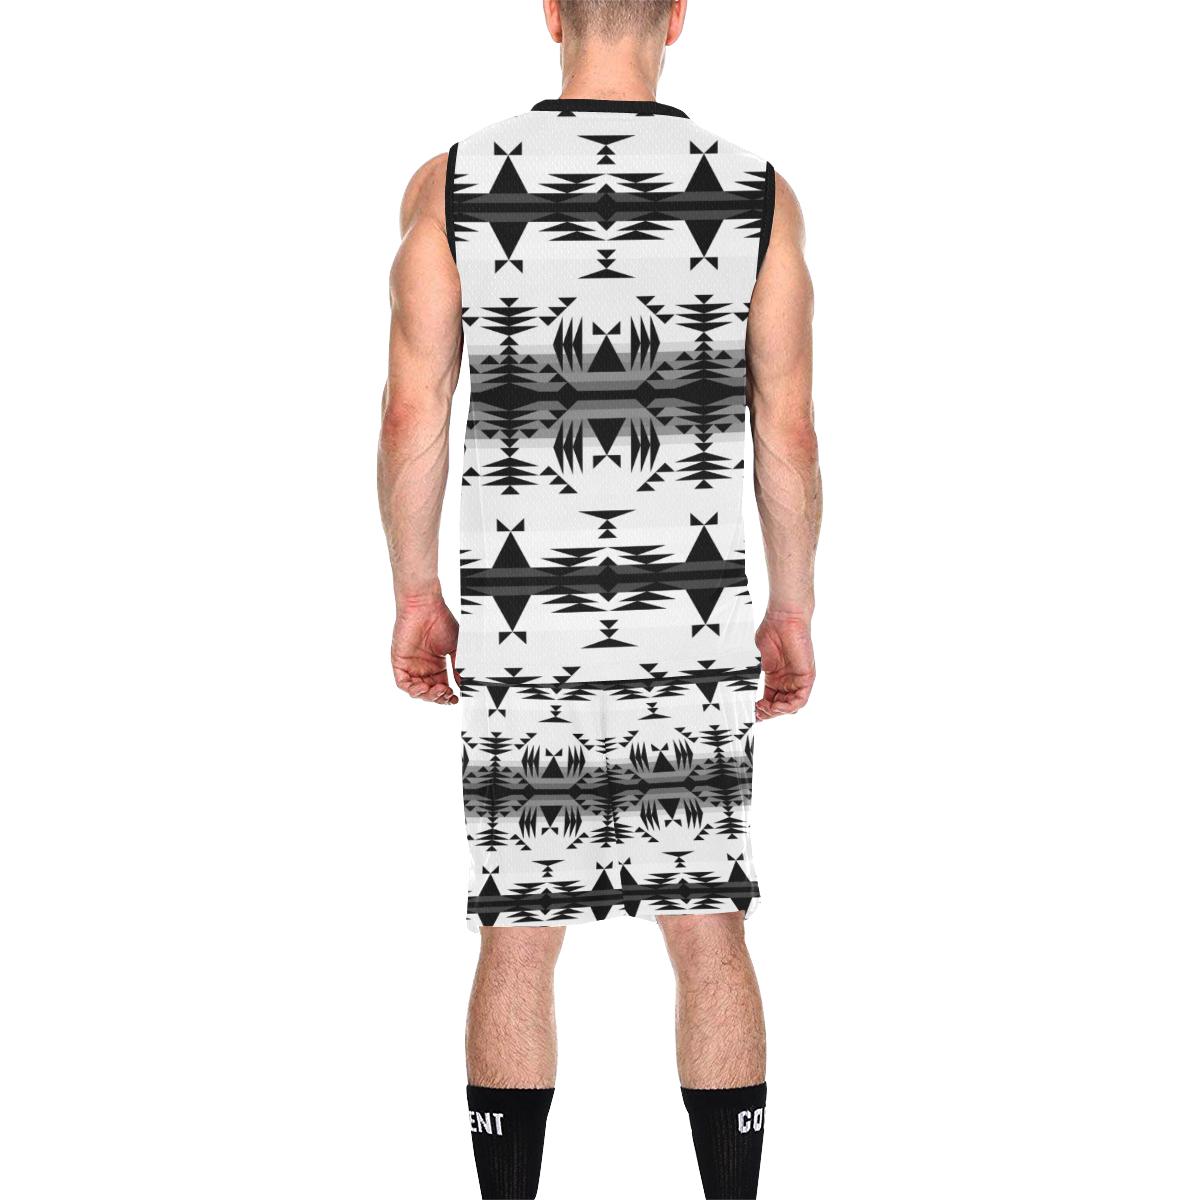 Between the Mountains White and Black All Over Print Basketball Uniform Basketball Uniform e-joyer 